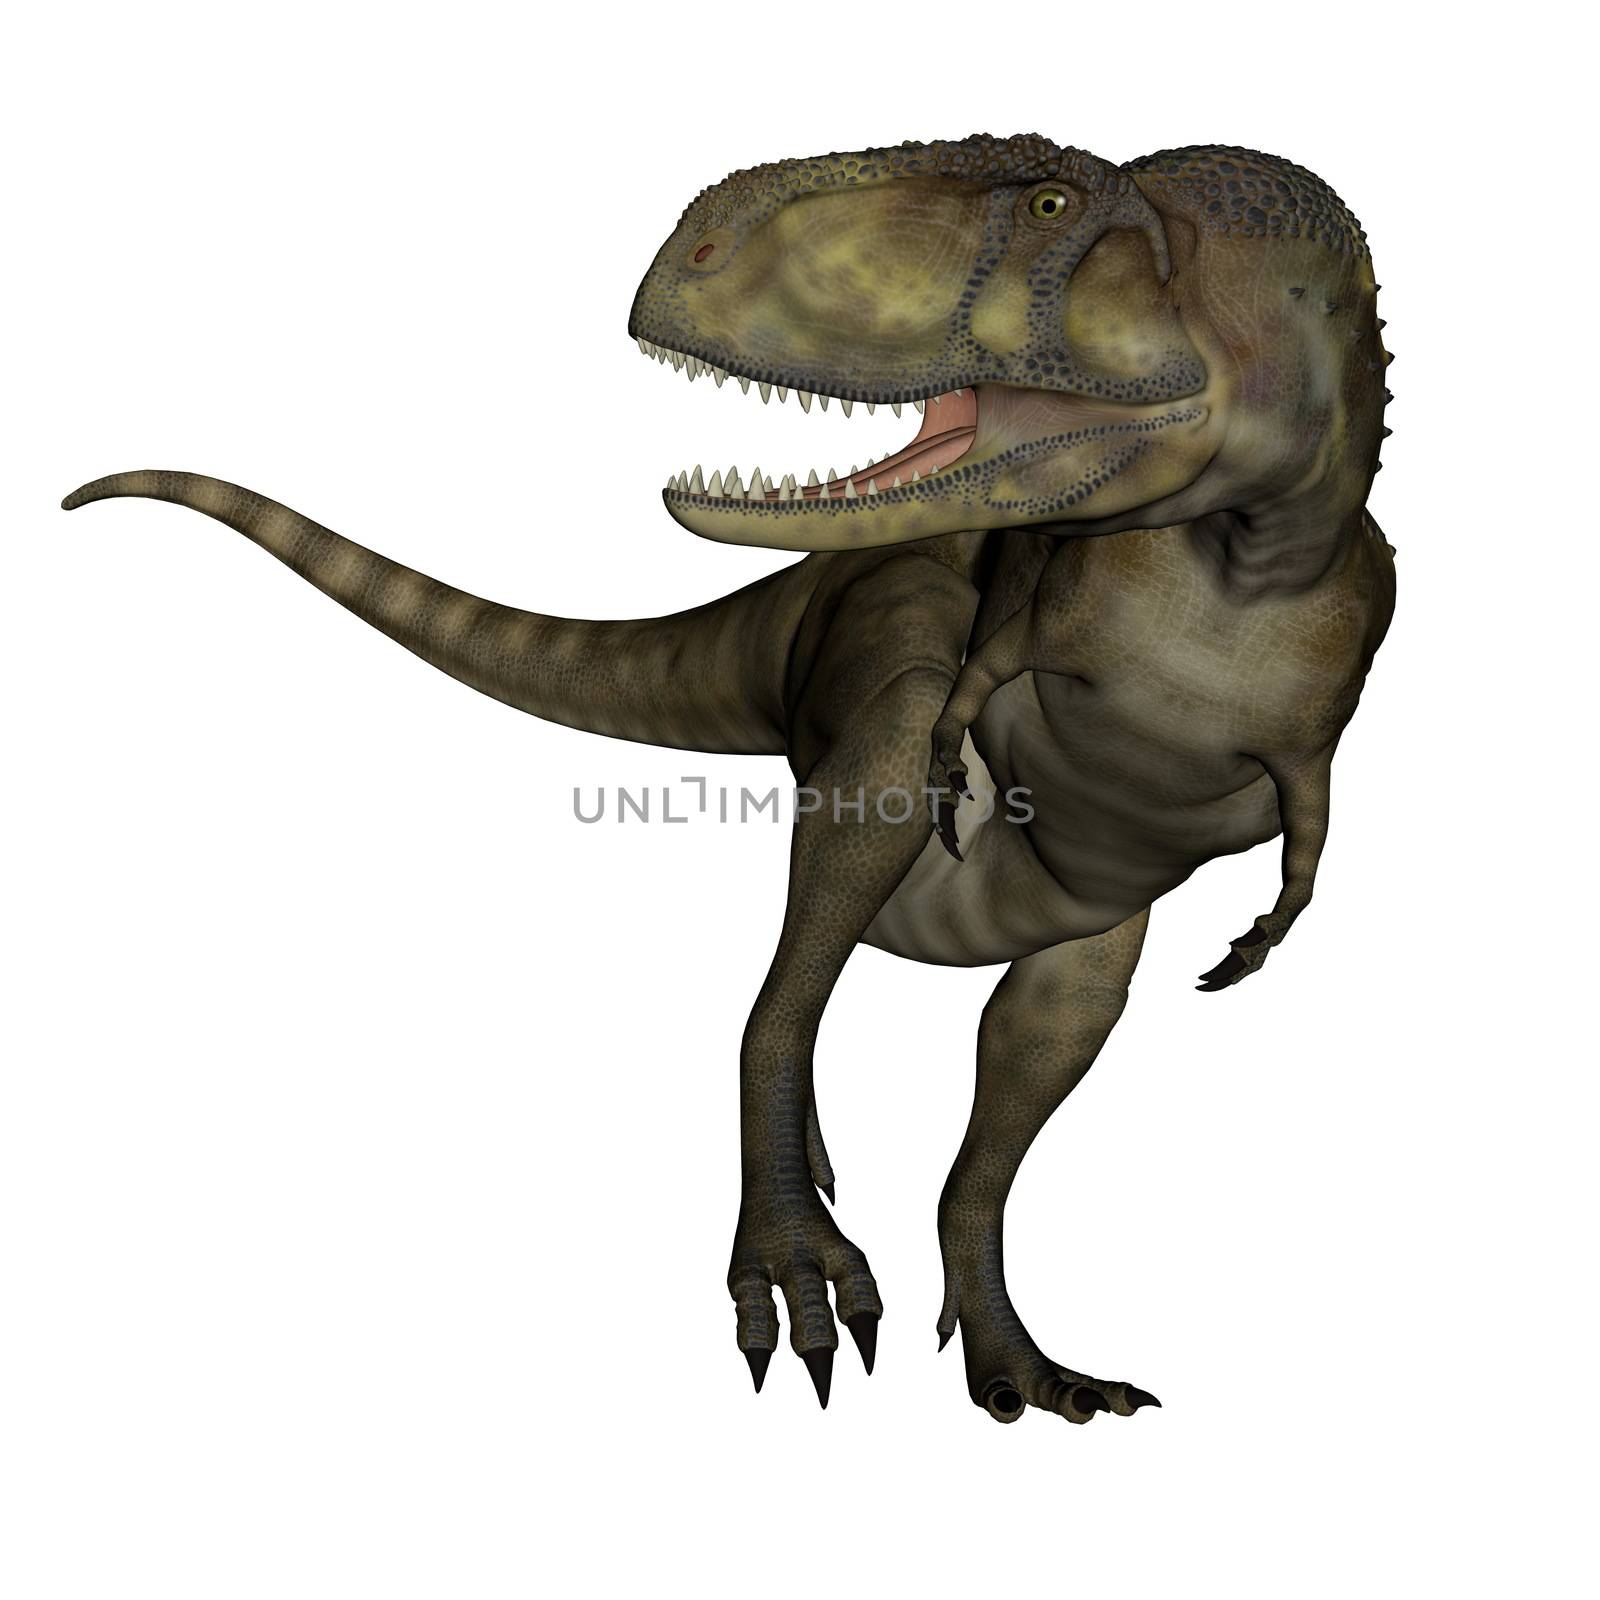 Abelosaurus dinosaur roaring isolated in white background - 3D render